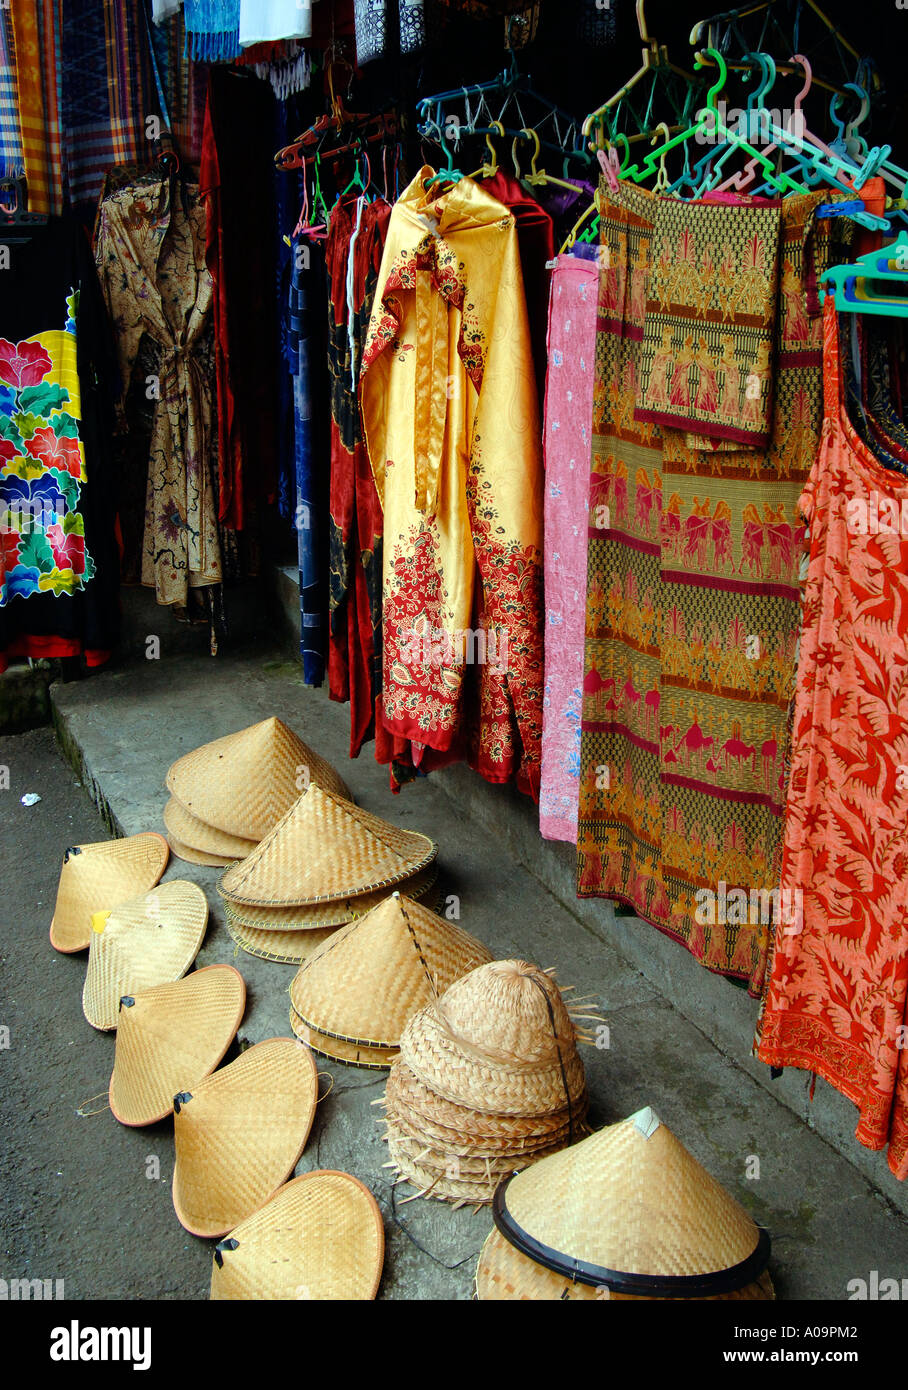 Coolie sun hata and sarongs, Candi Dasa street market, Bali Indonesia Stock Photo